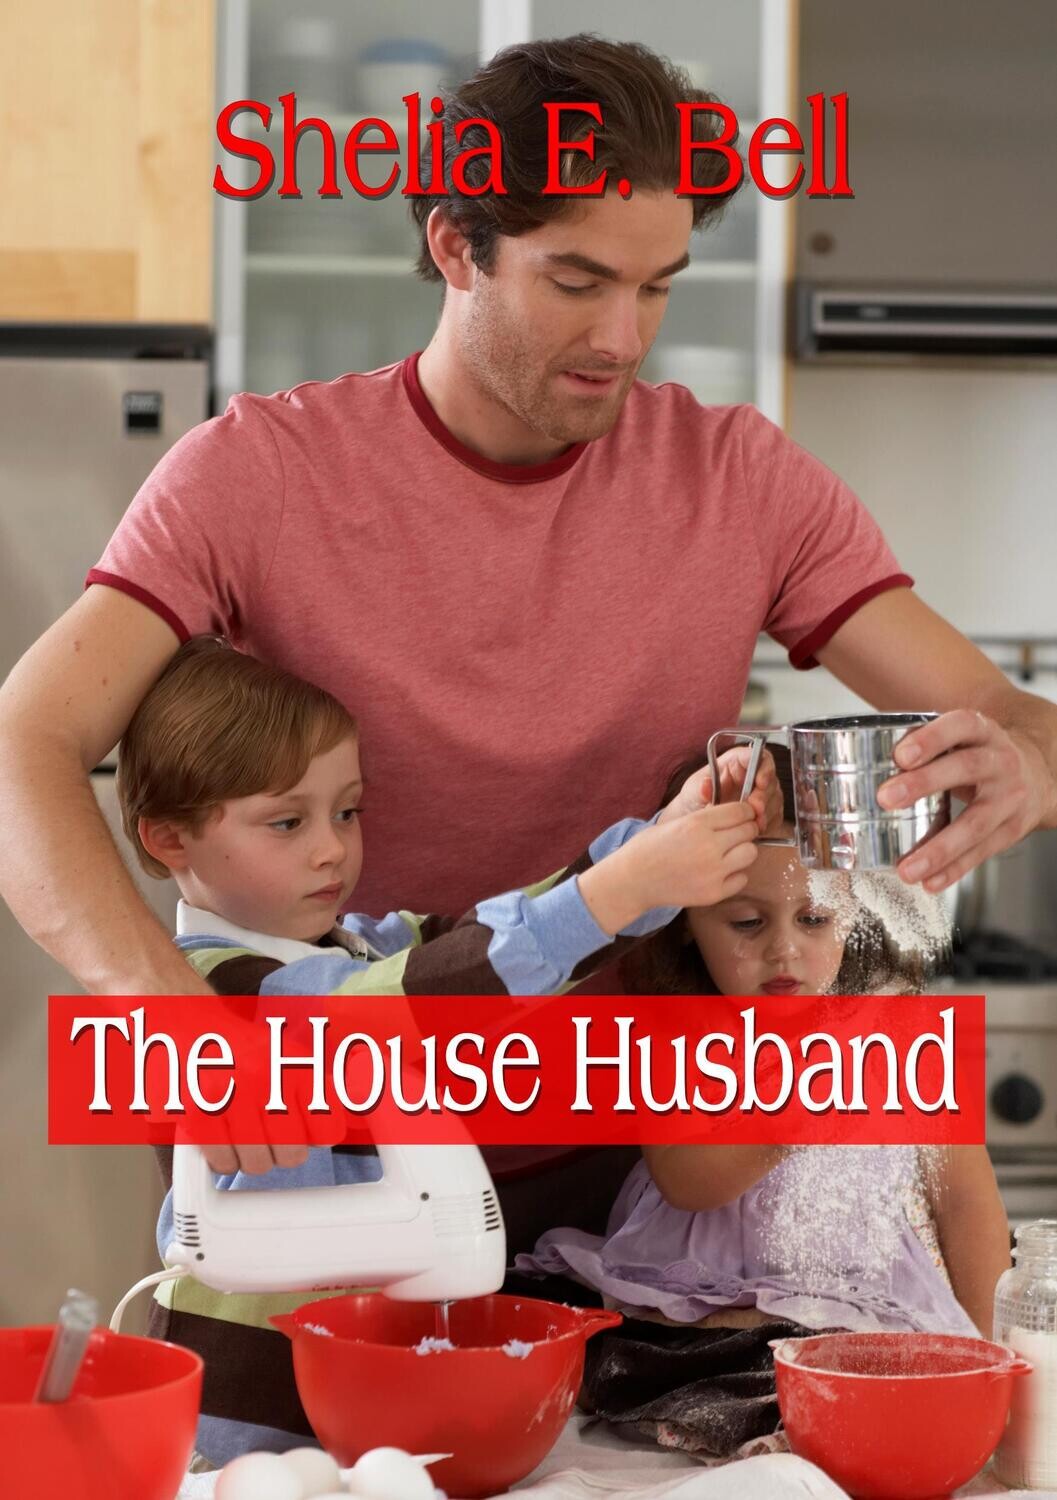 THE HOUSE HUSBAND